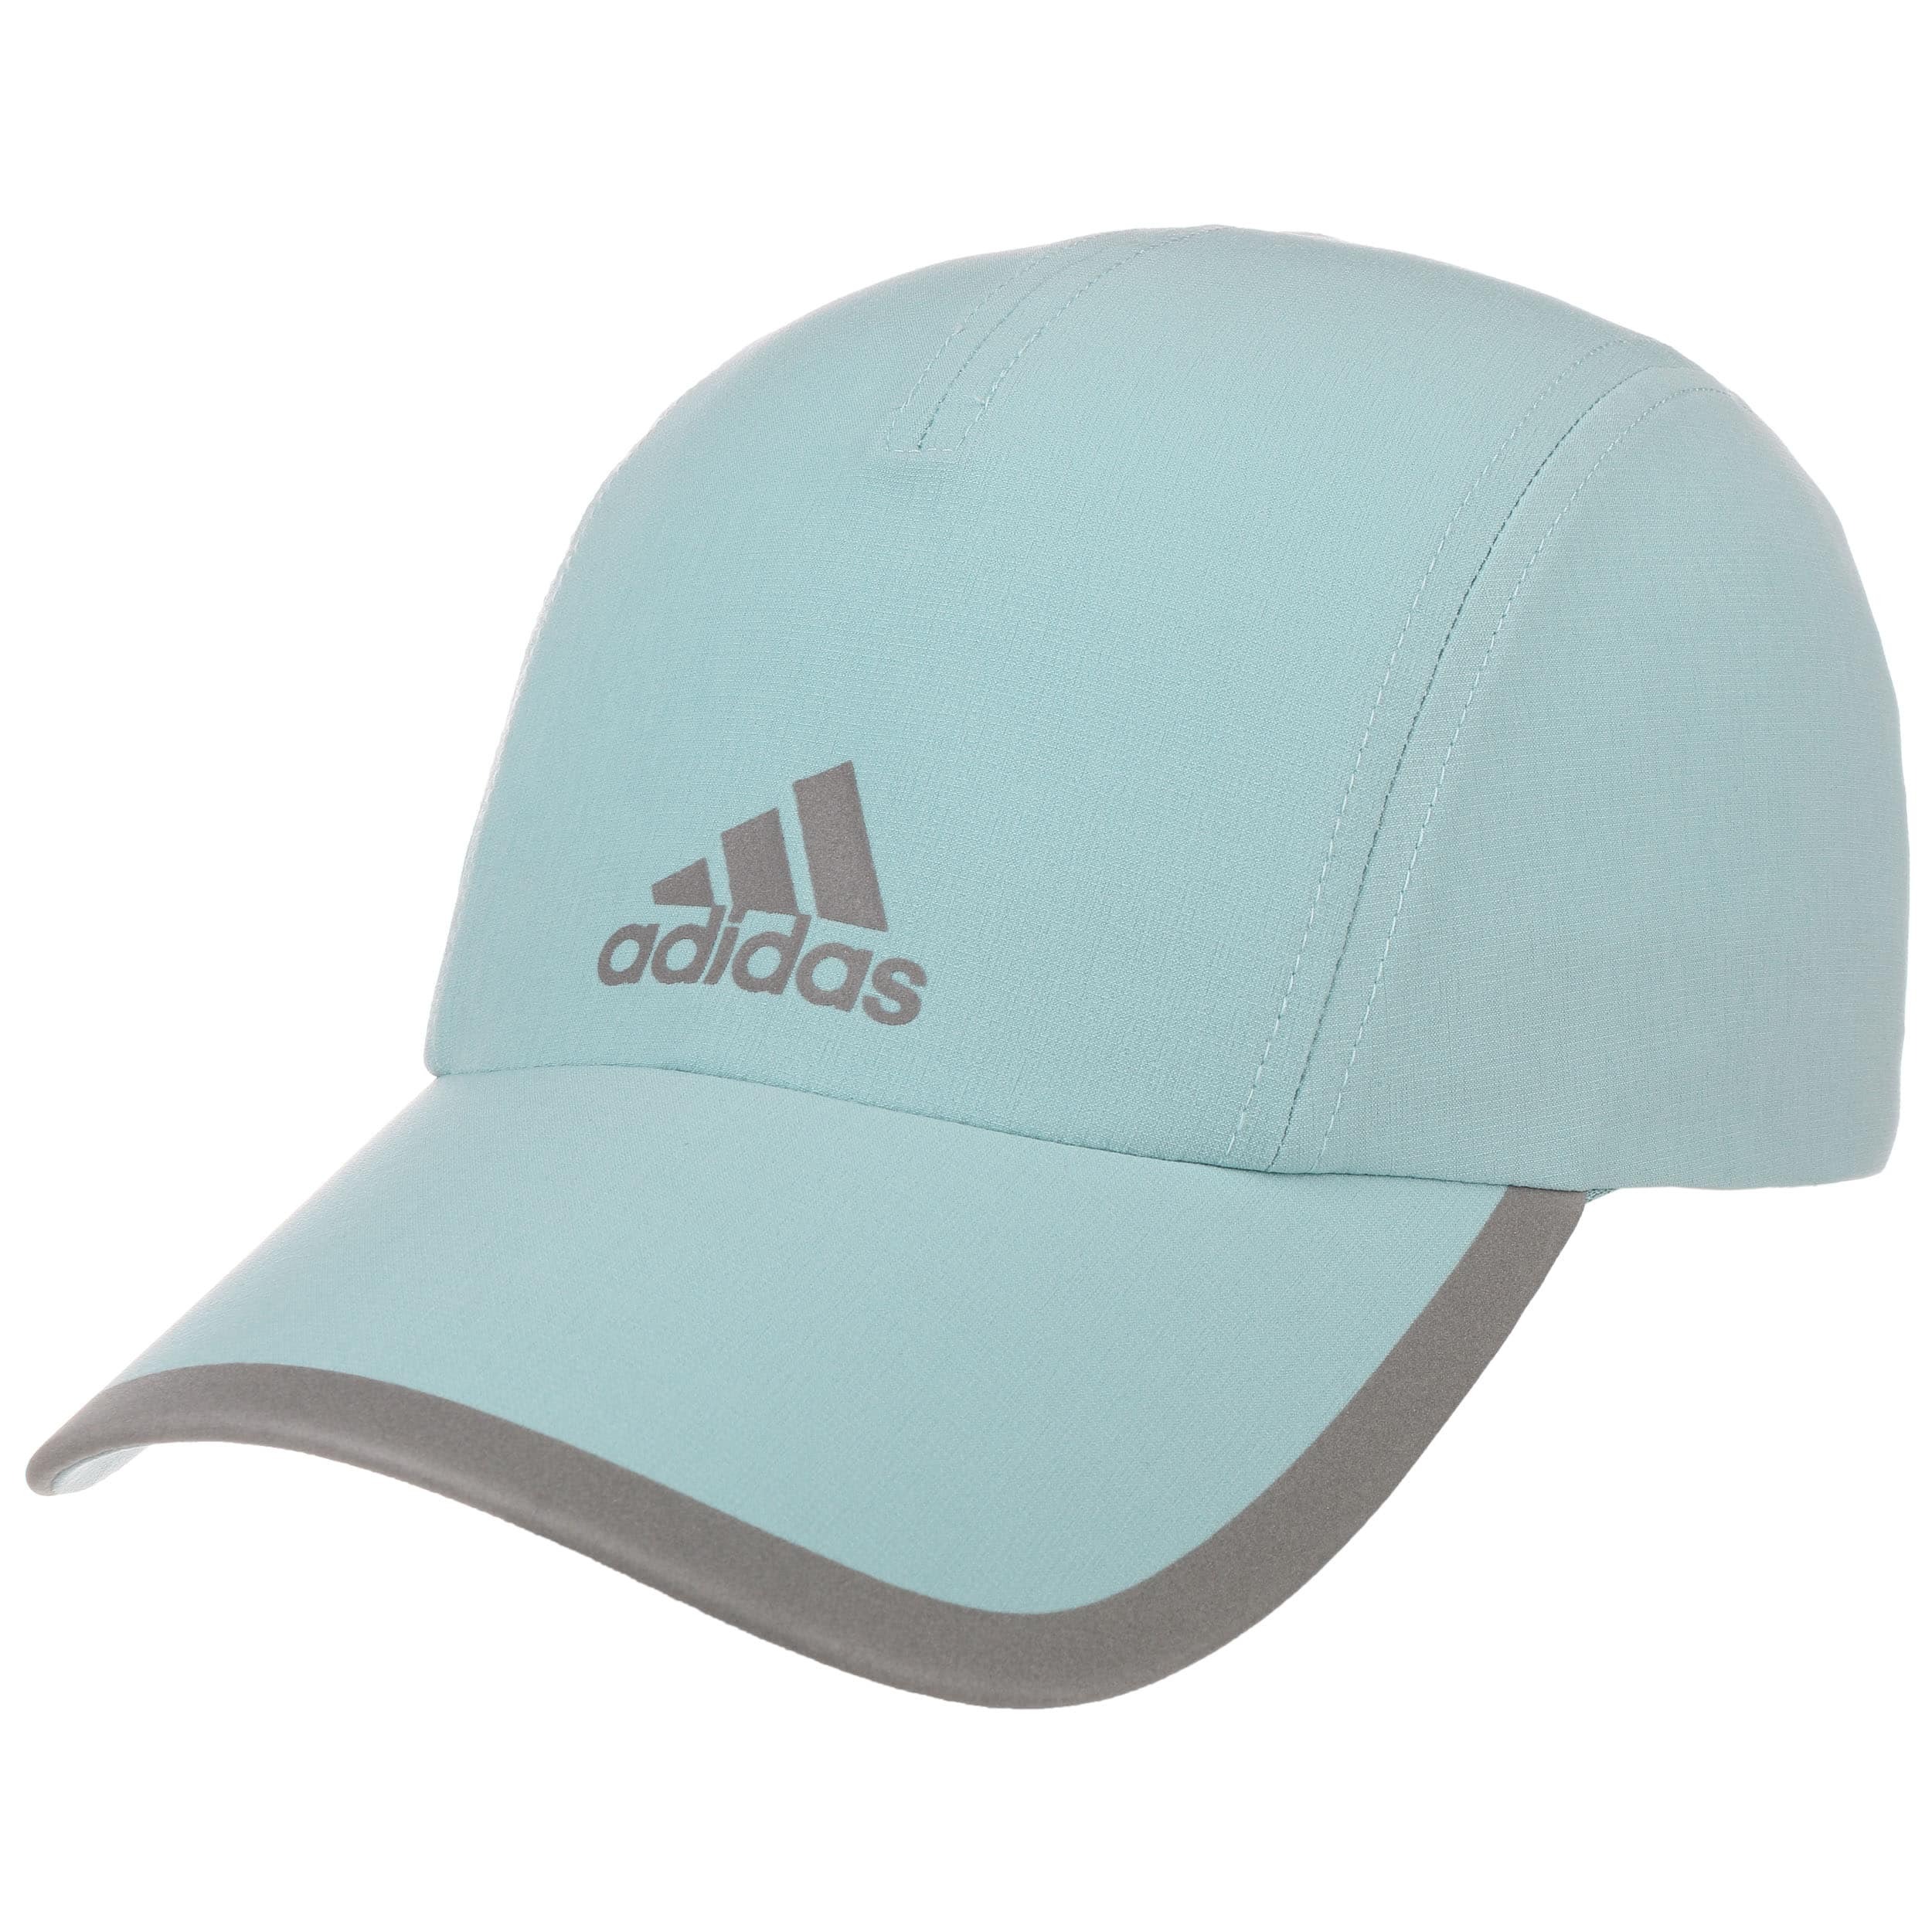 adidas light blue hat